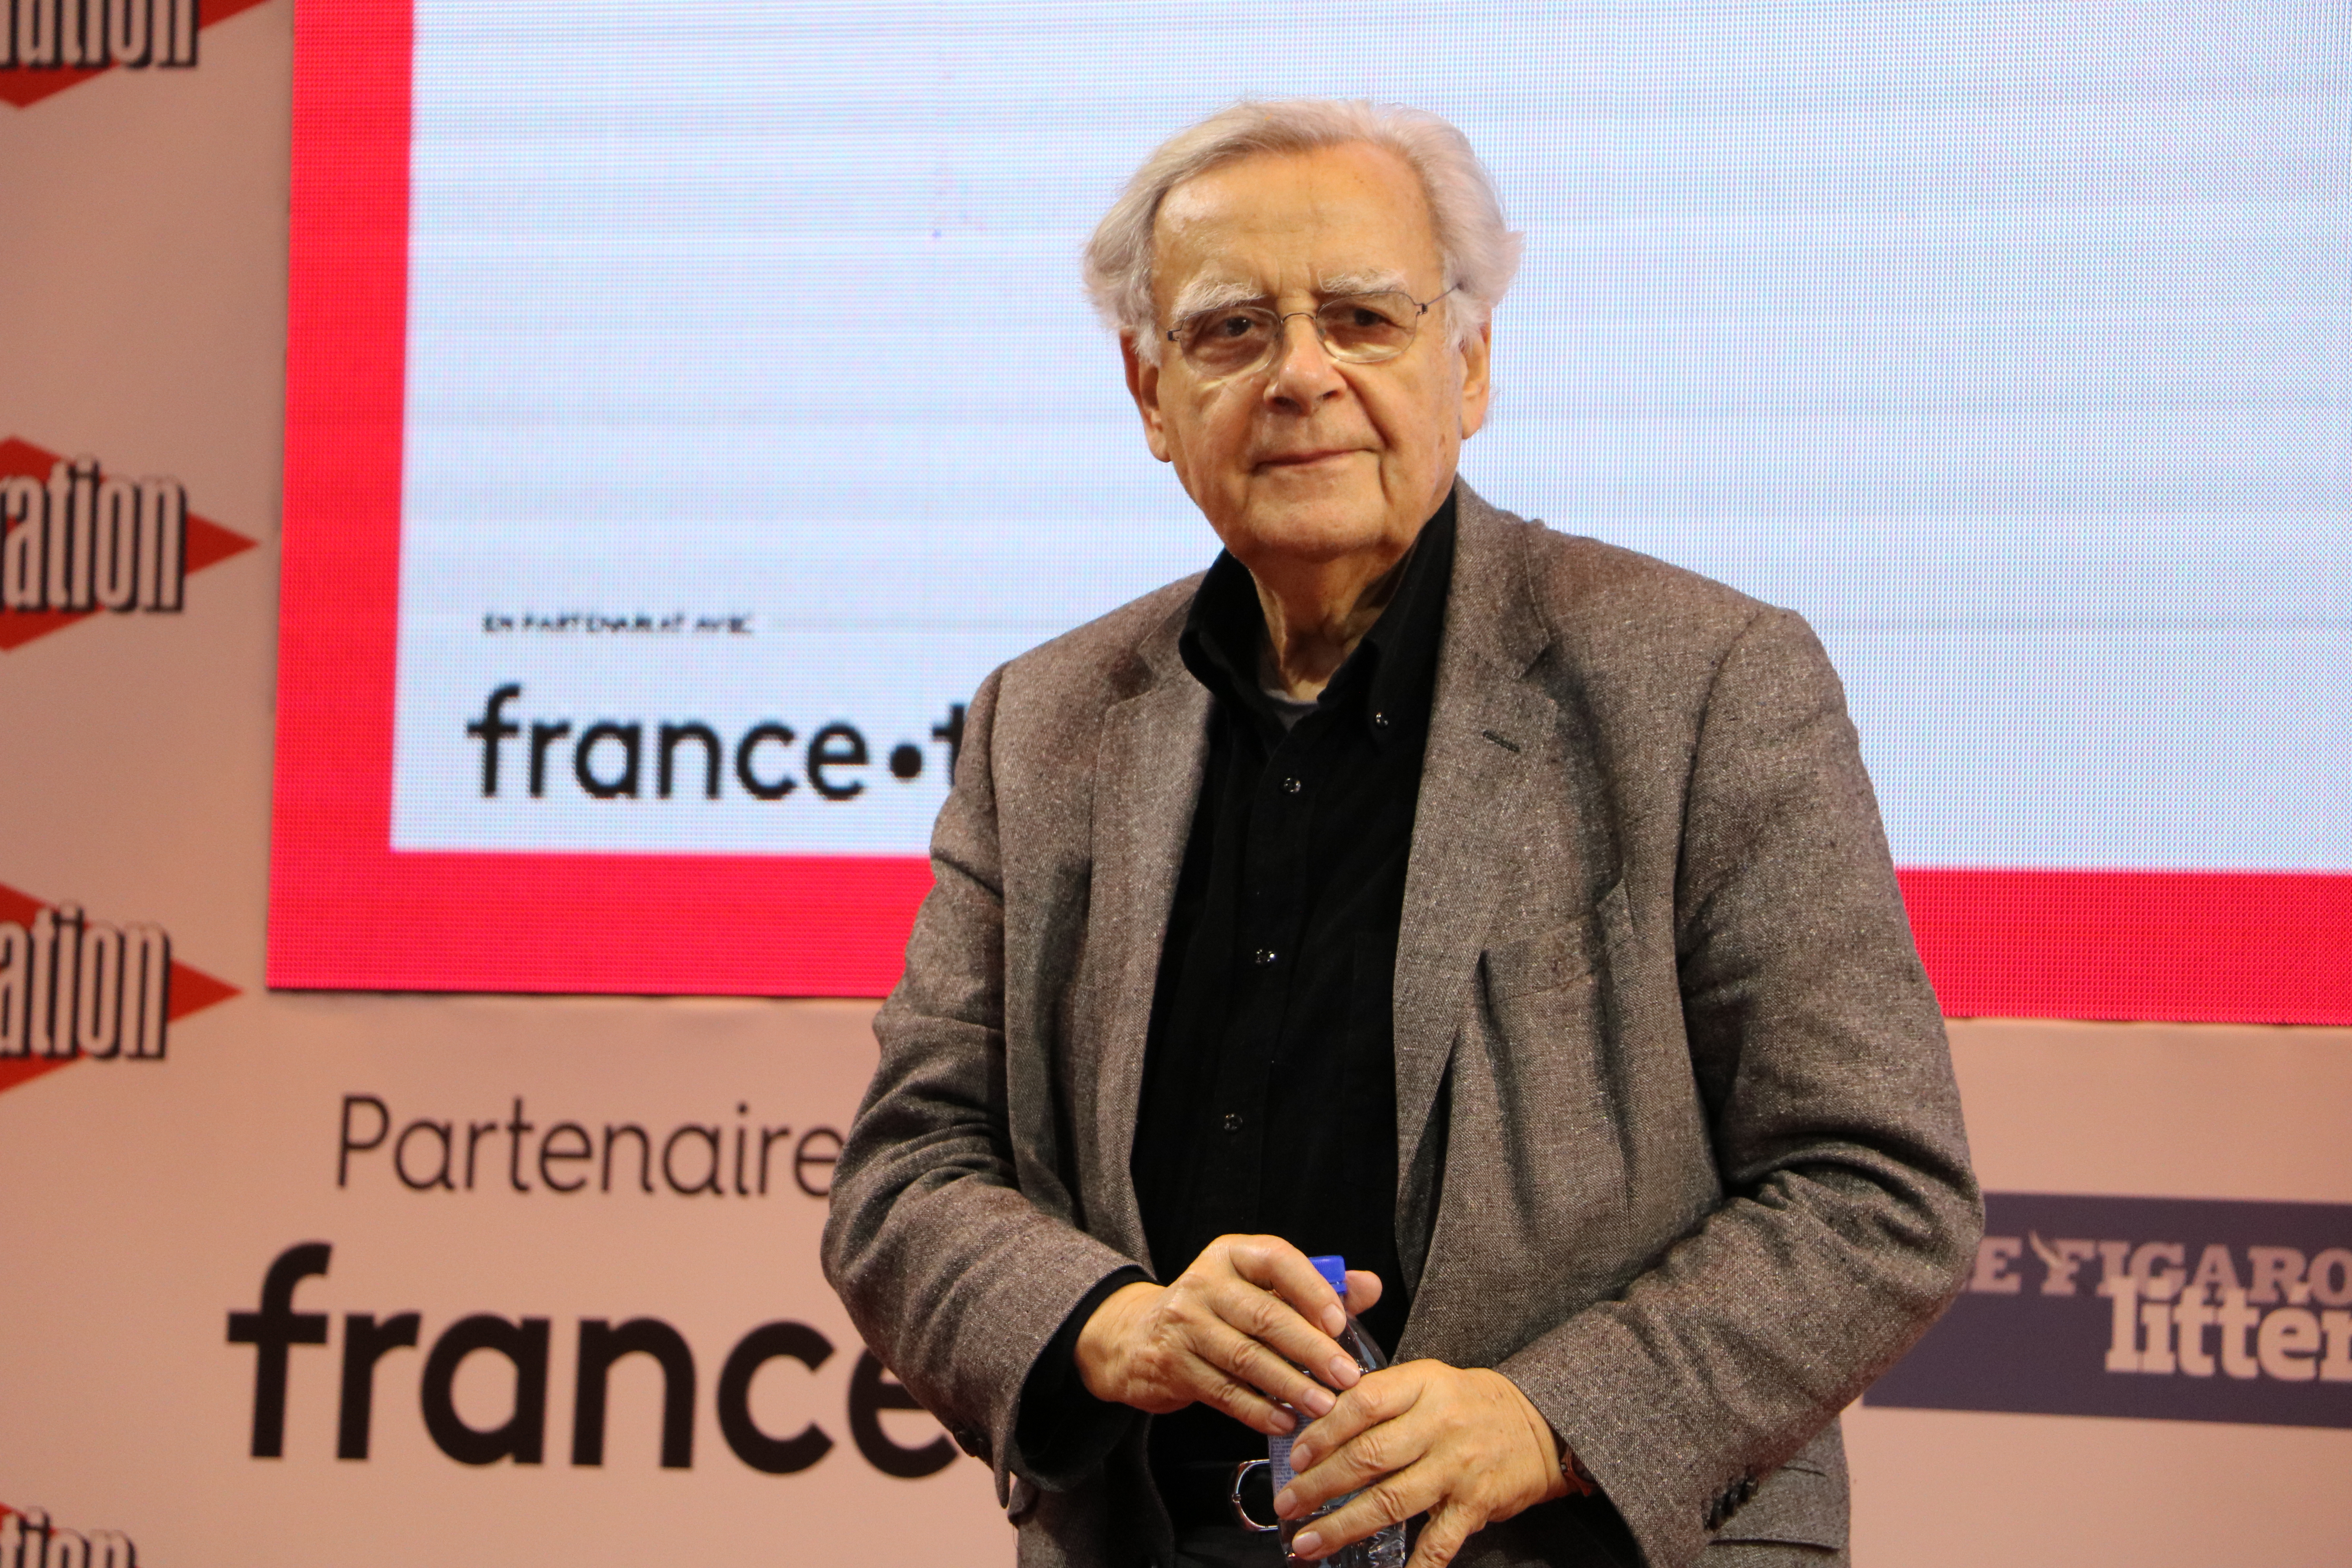 Bernard Pivot au Salon du livre de Paris 2018. | Photo : Wikimedia